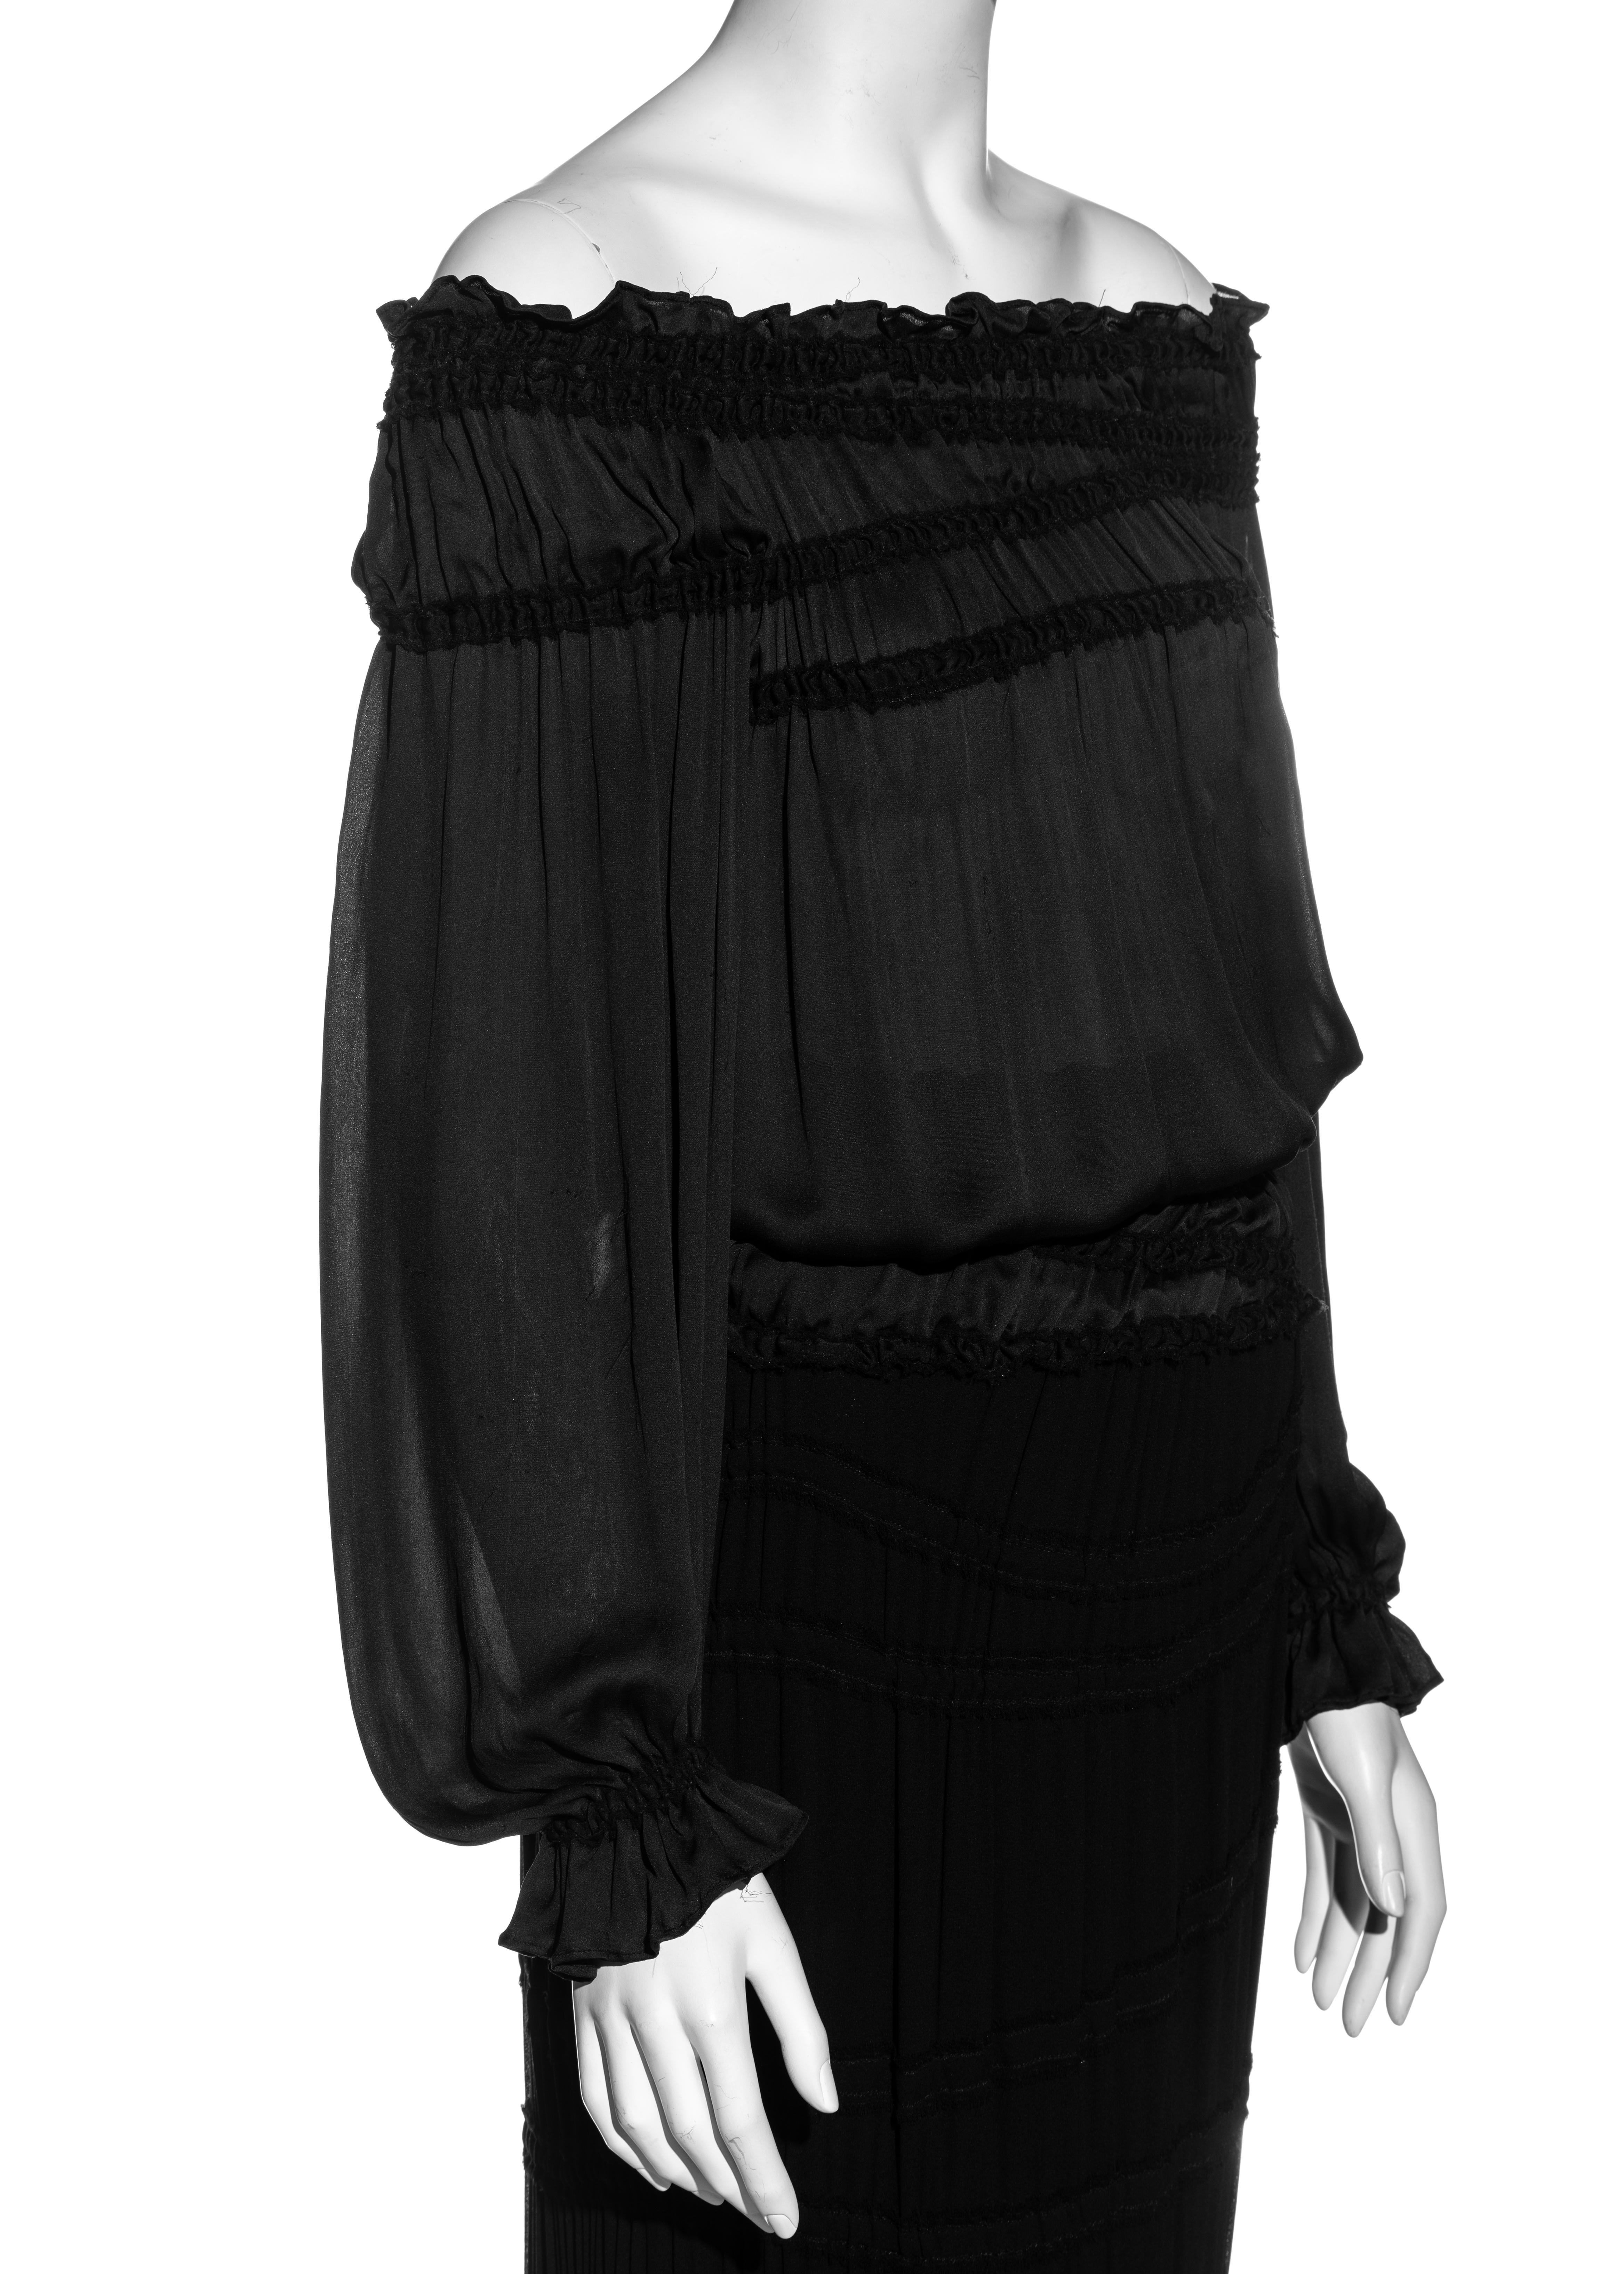 Yves Saint Laurent by Tom Ford black silk poet blouse and maxi skirt, fw 2001 1